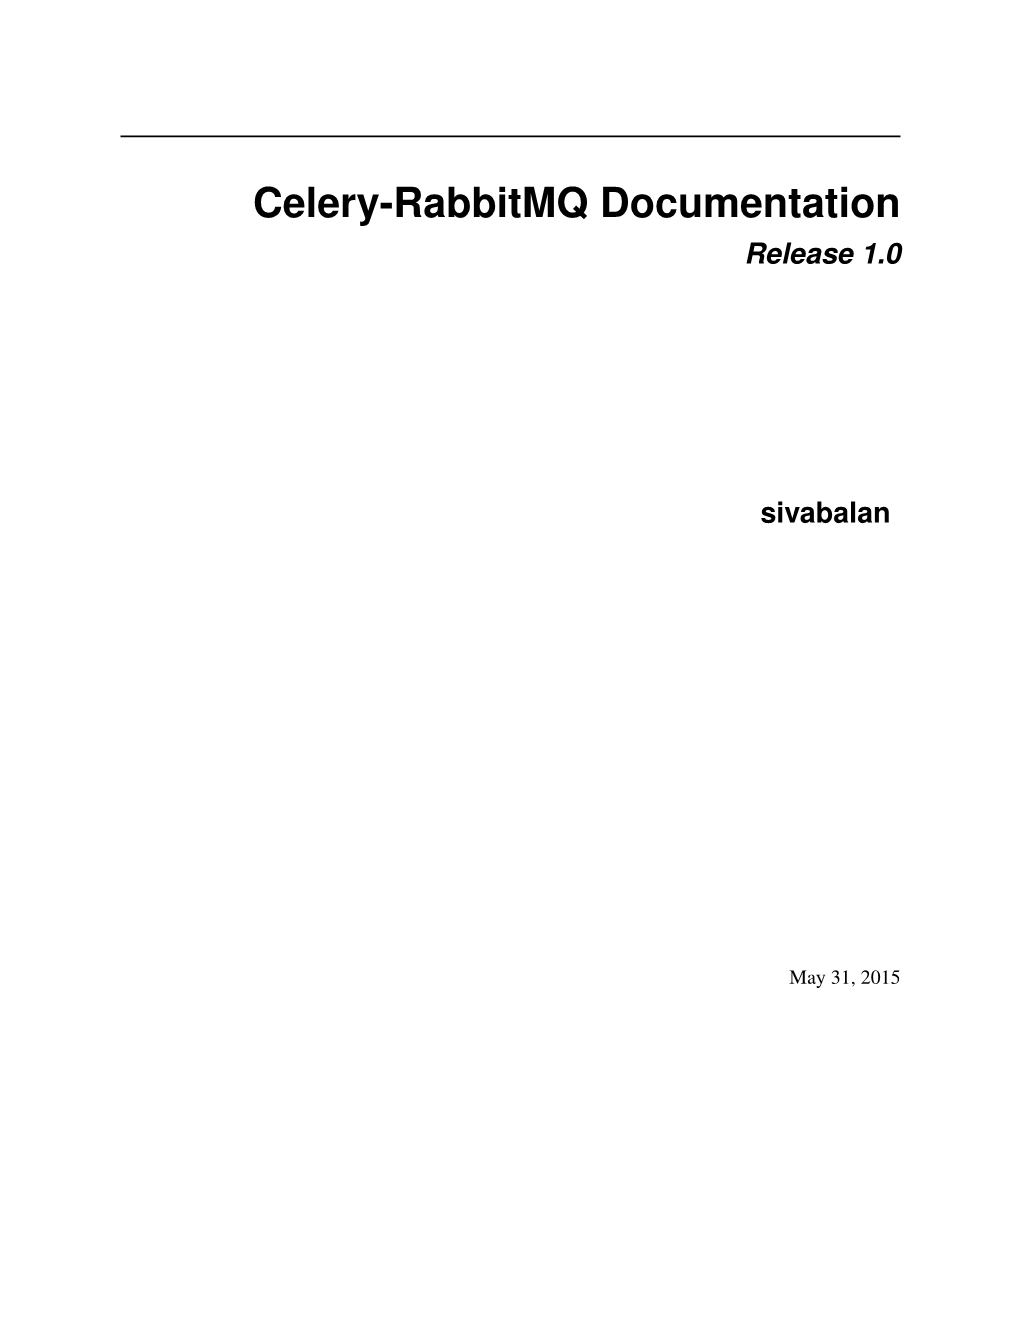 Celery-Rabbitmq Documentation Release 1.0